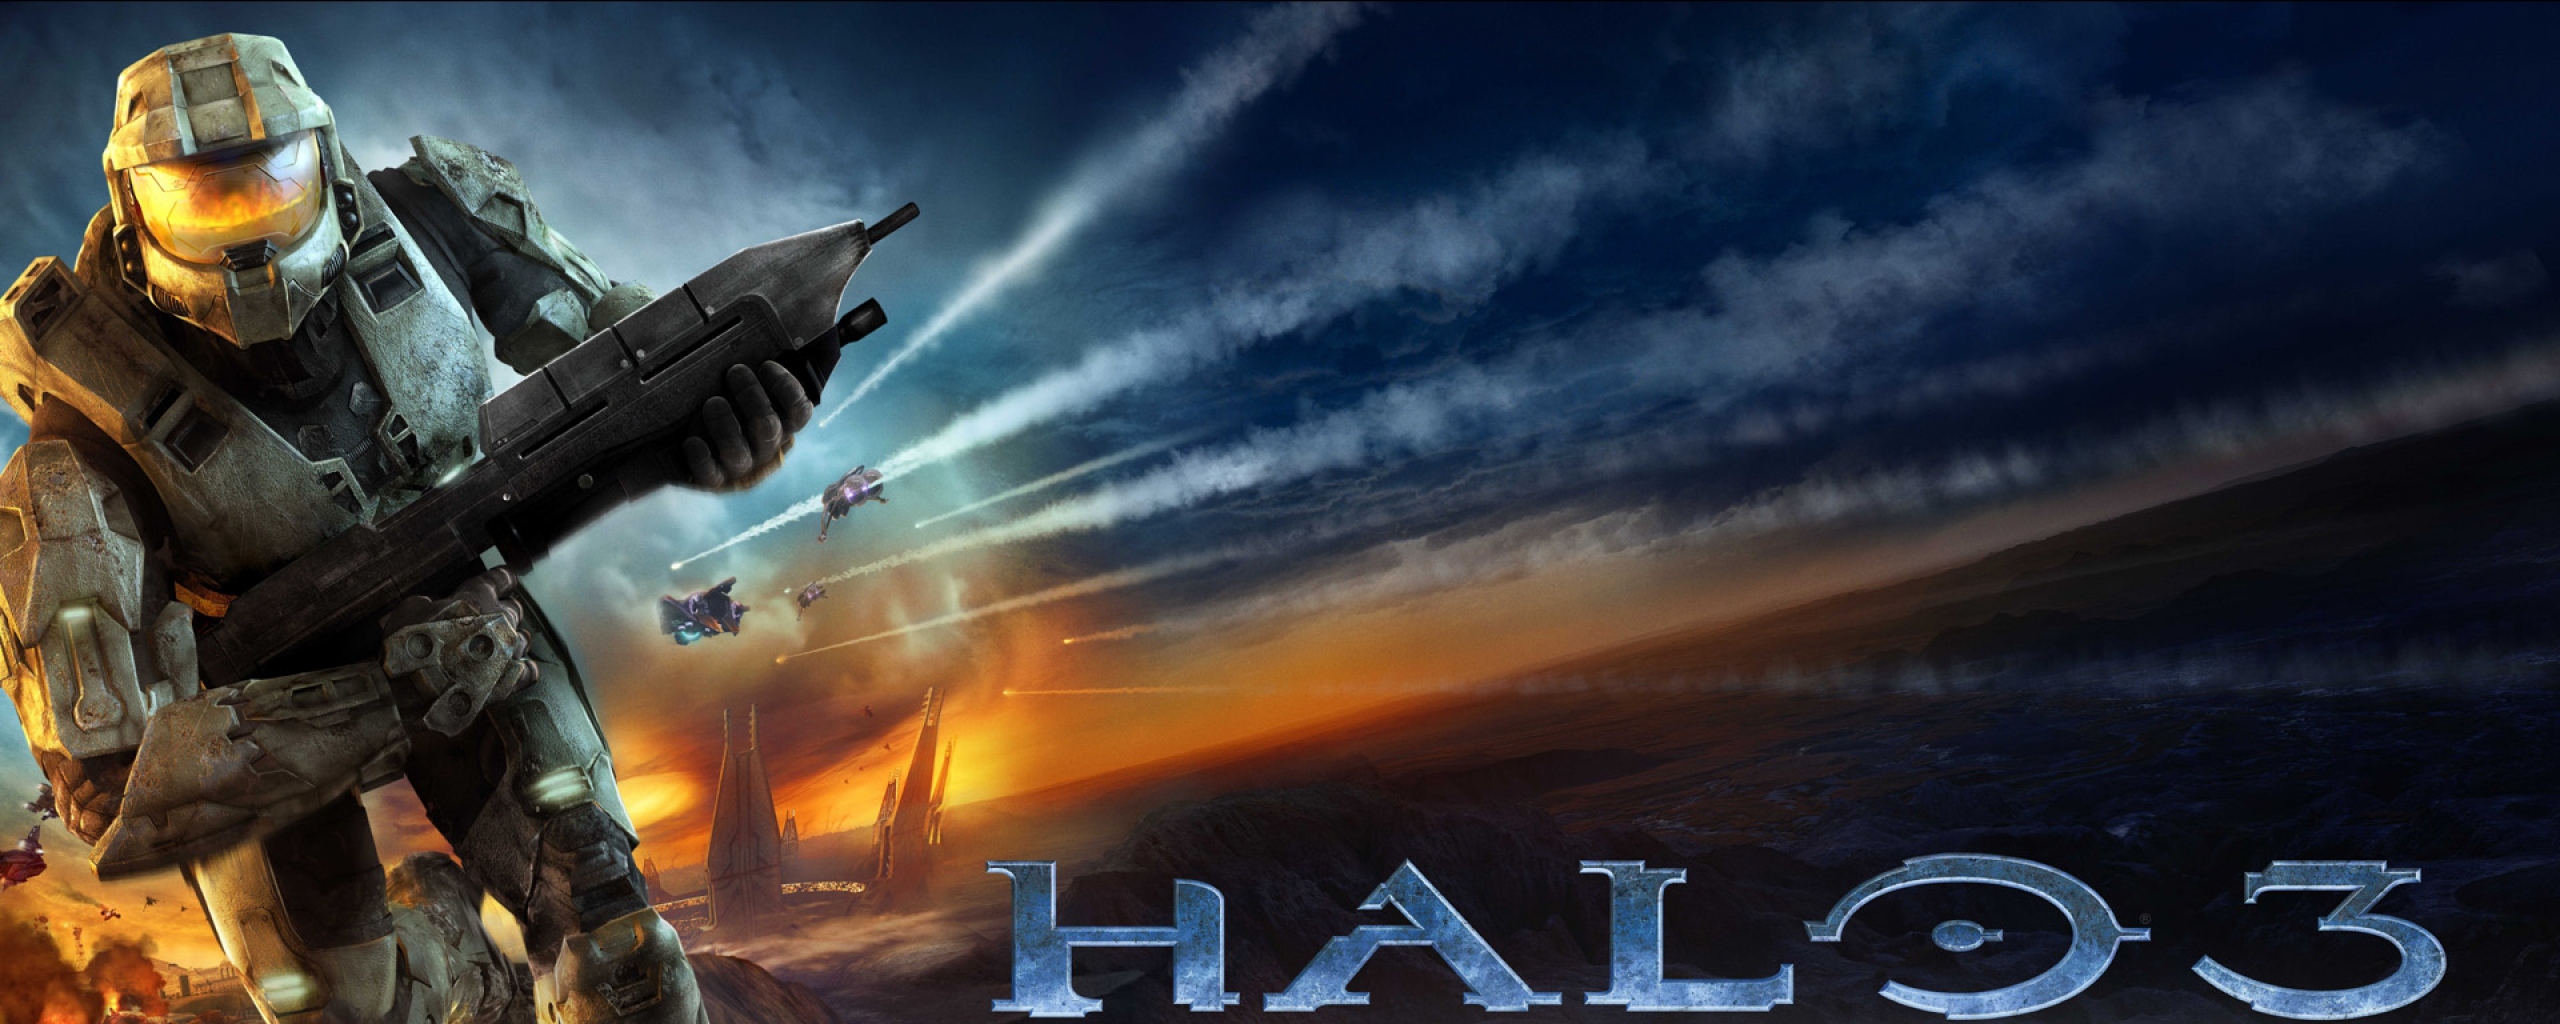 Wallpaper Halo Soldier Run Sky Explosion Dual Monitor